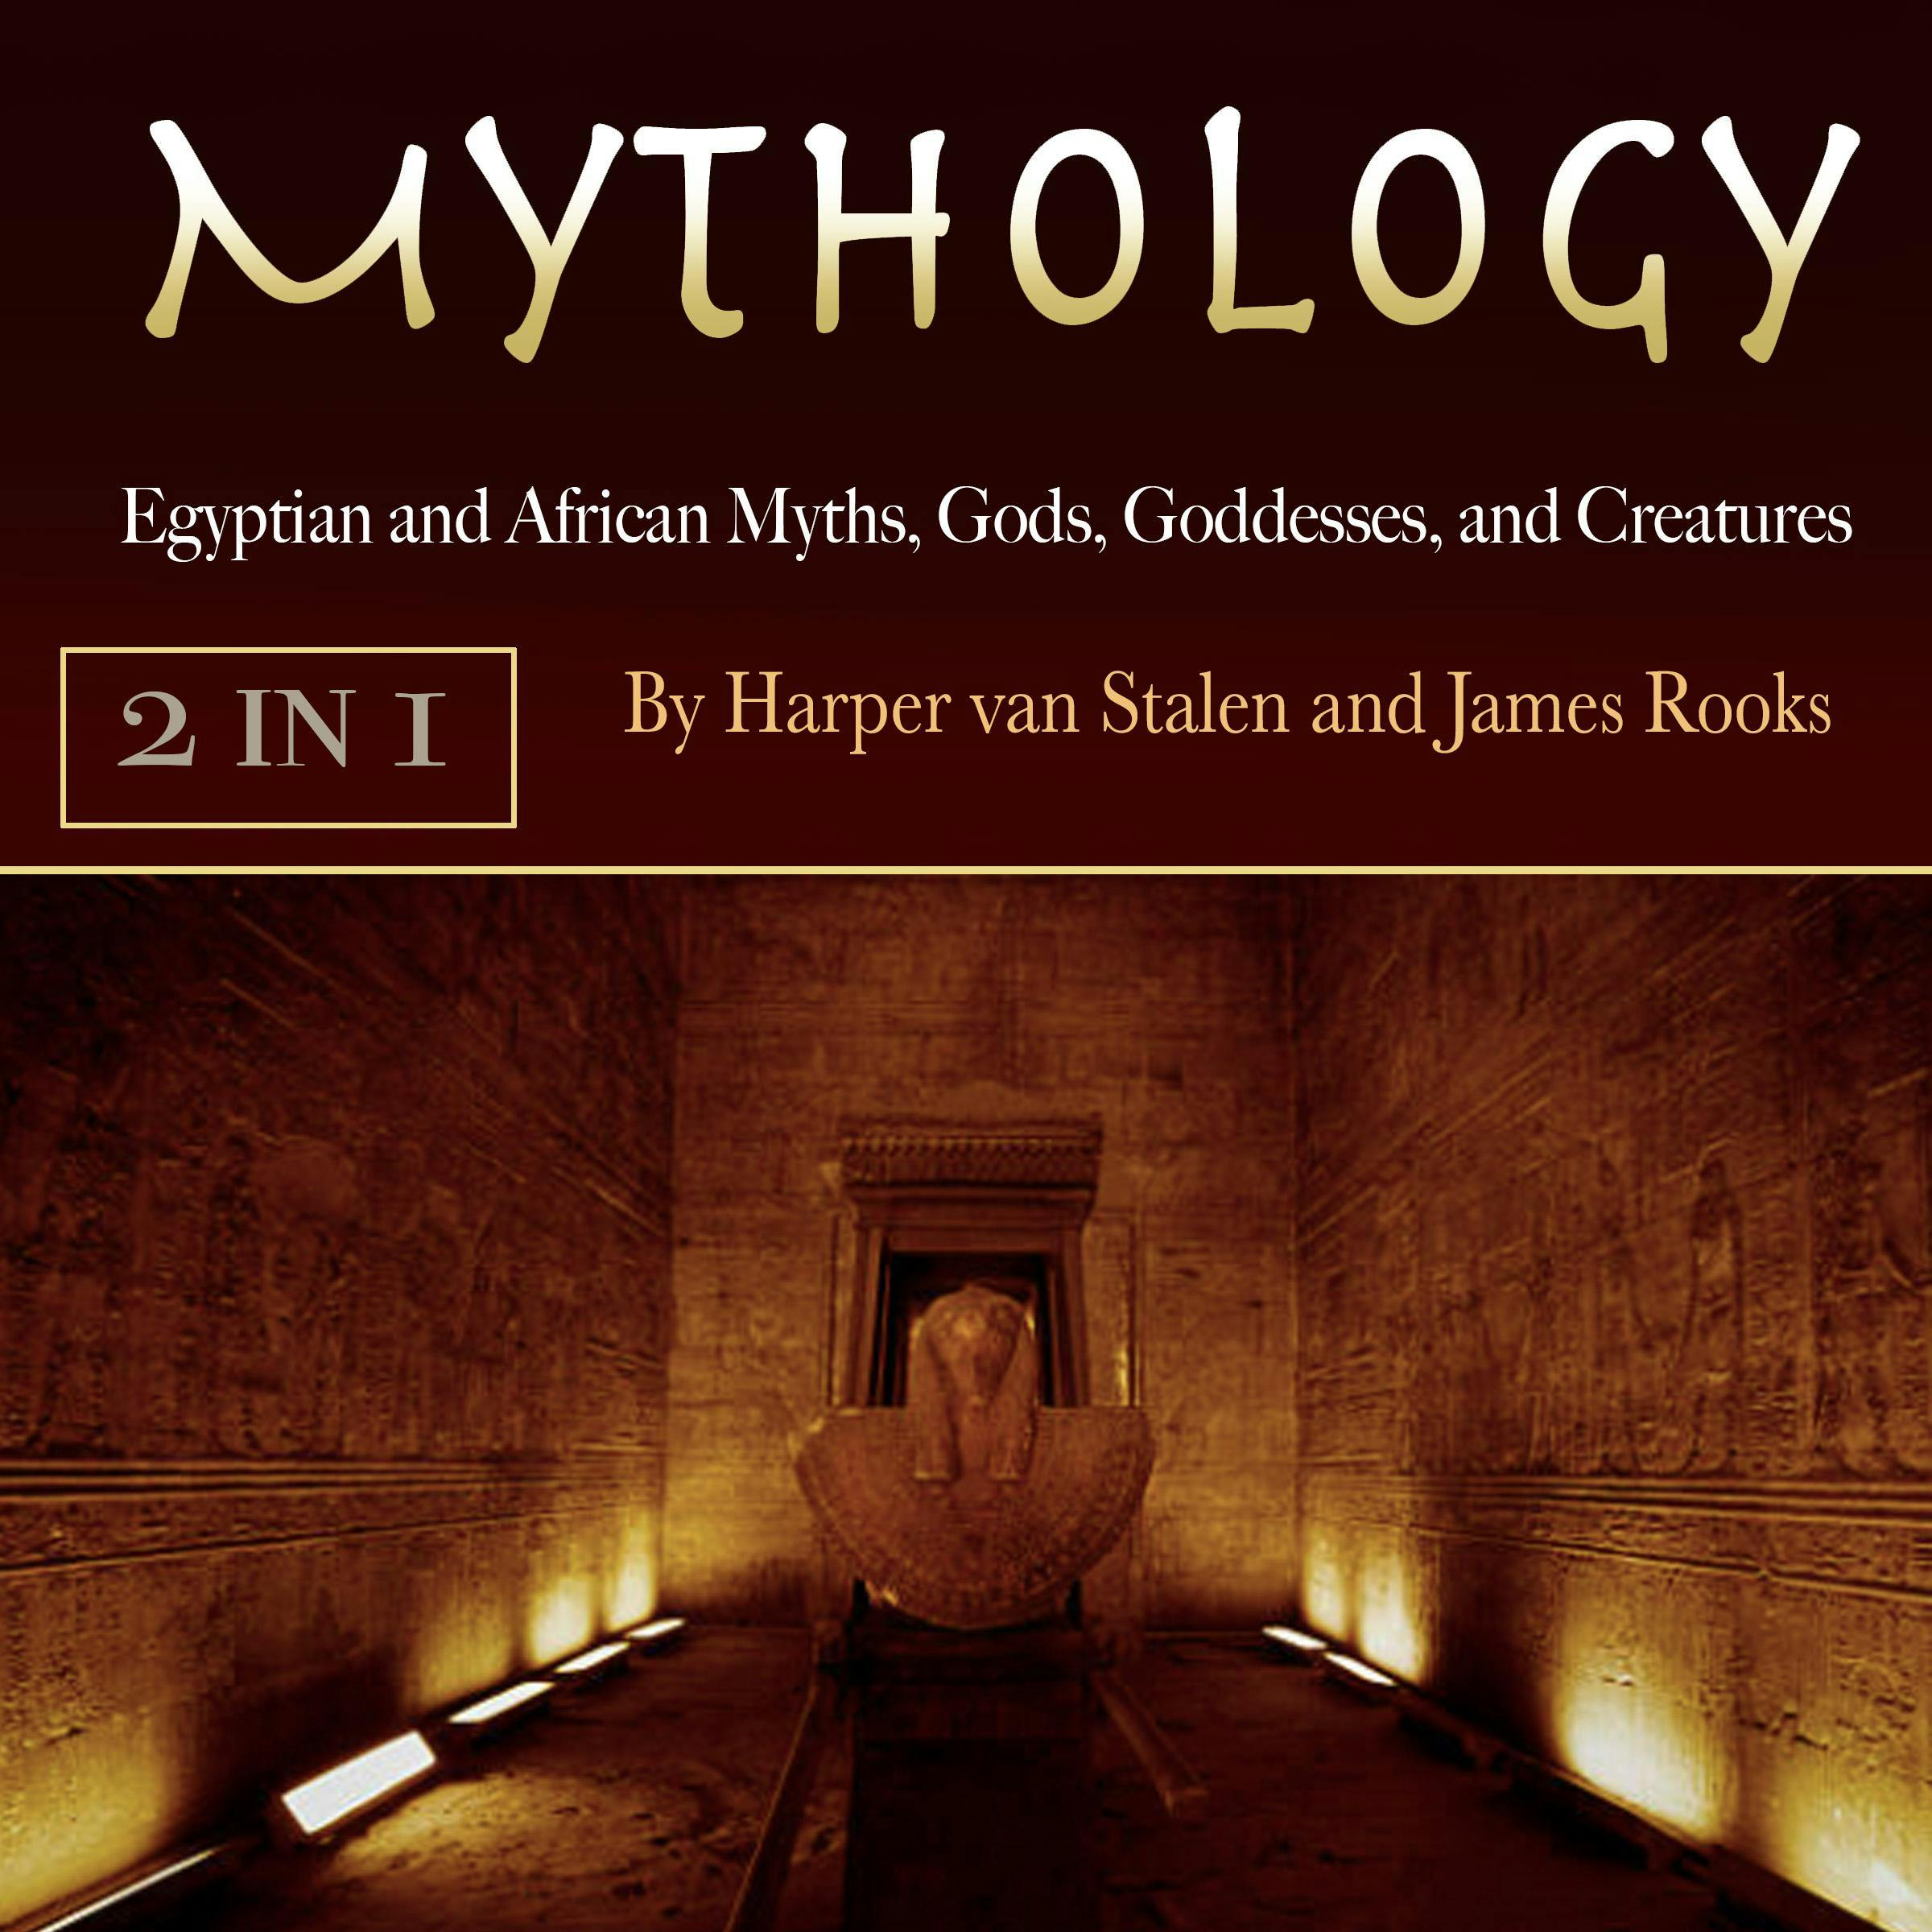 Mythology: Egyptian and African Myths, Gods, Goddesses, and Creatures - undefined